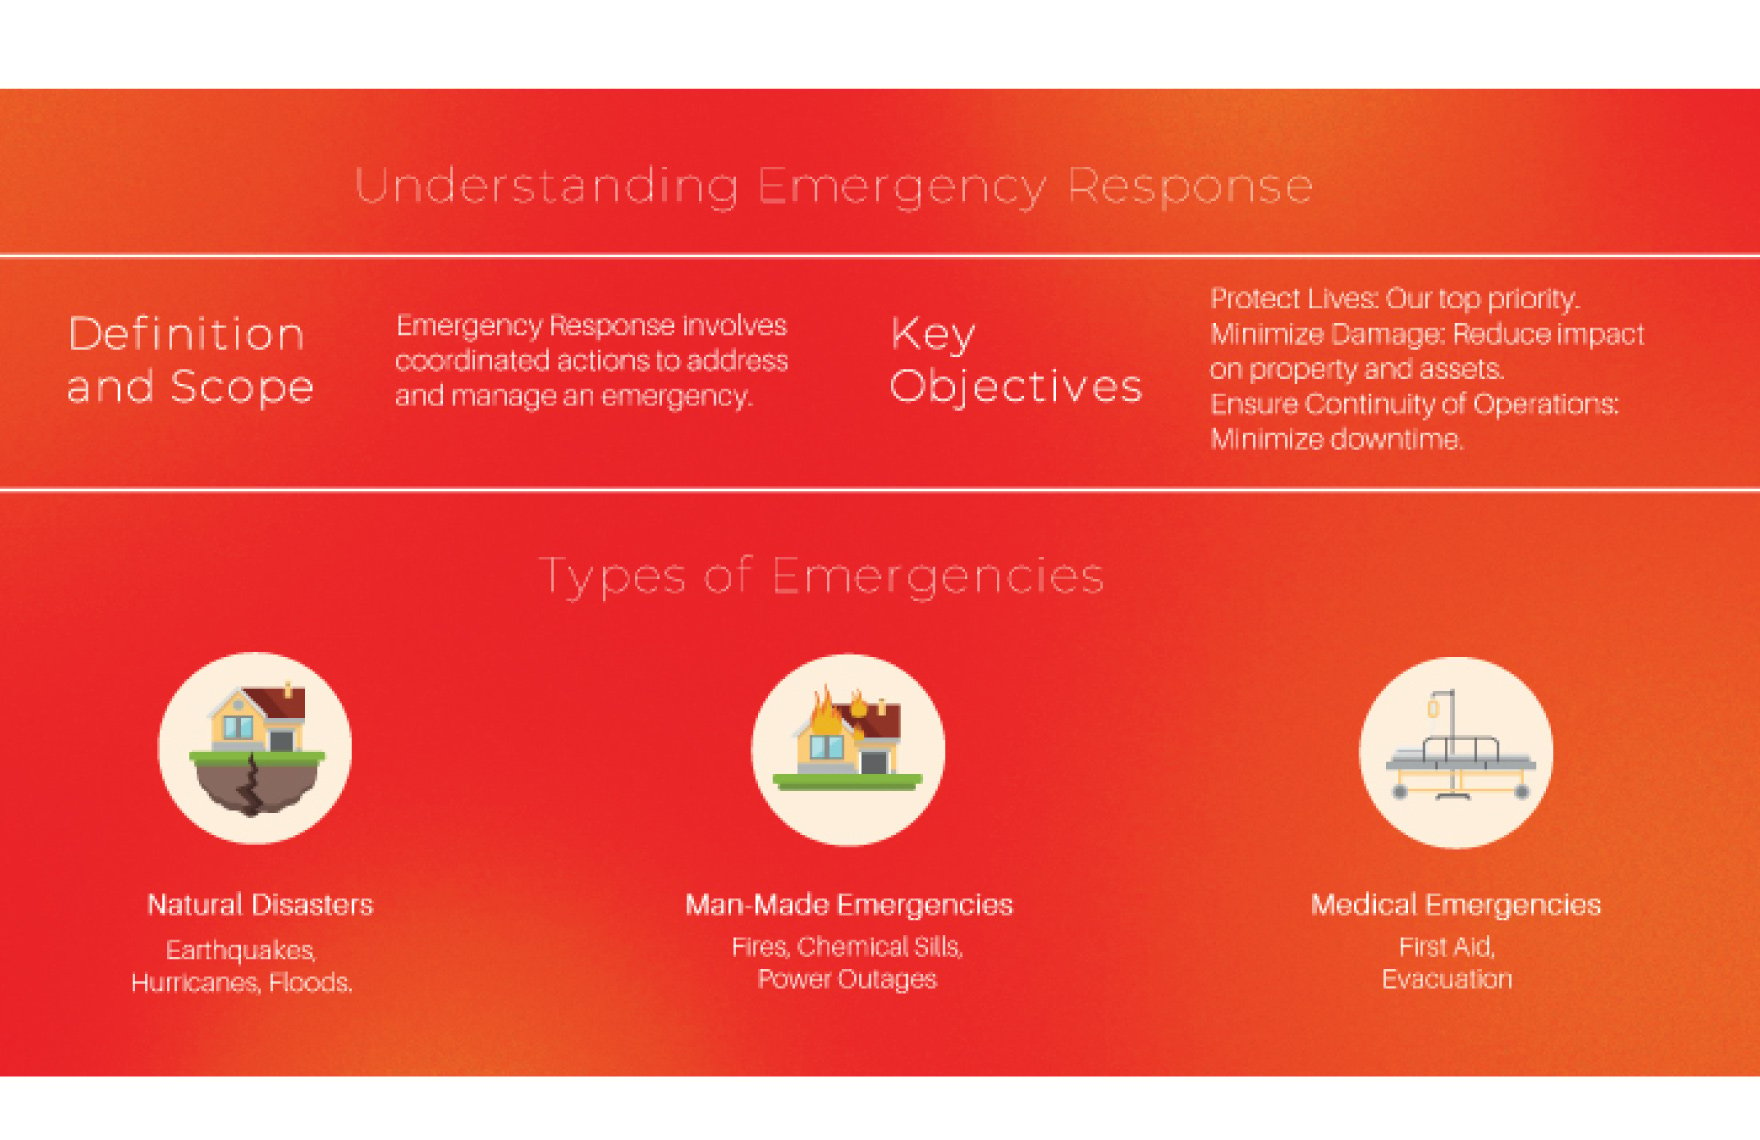 Emergency Response Procedures Presentation Template